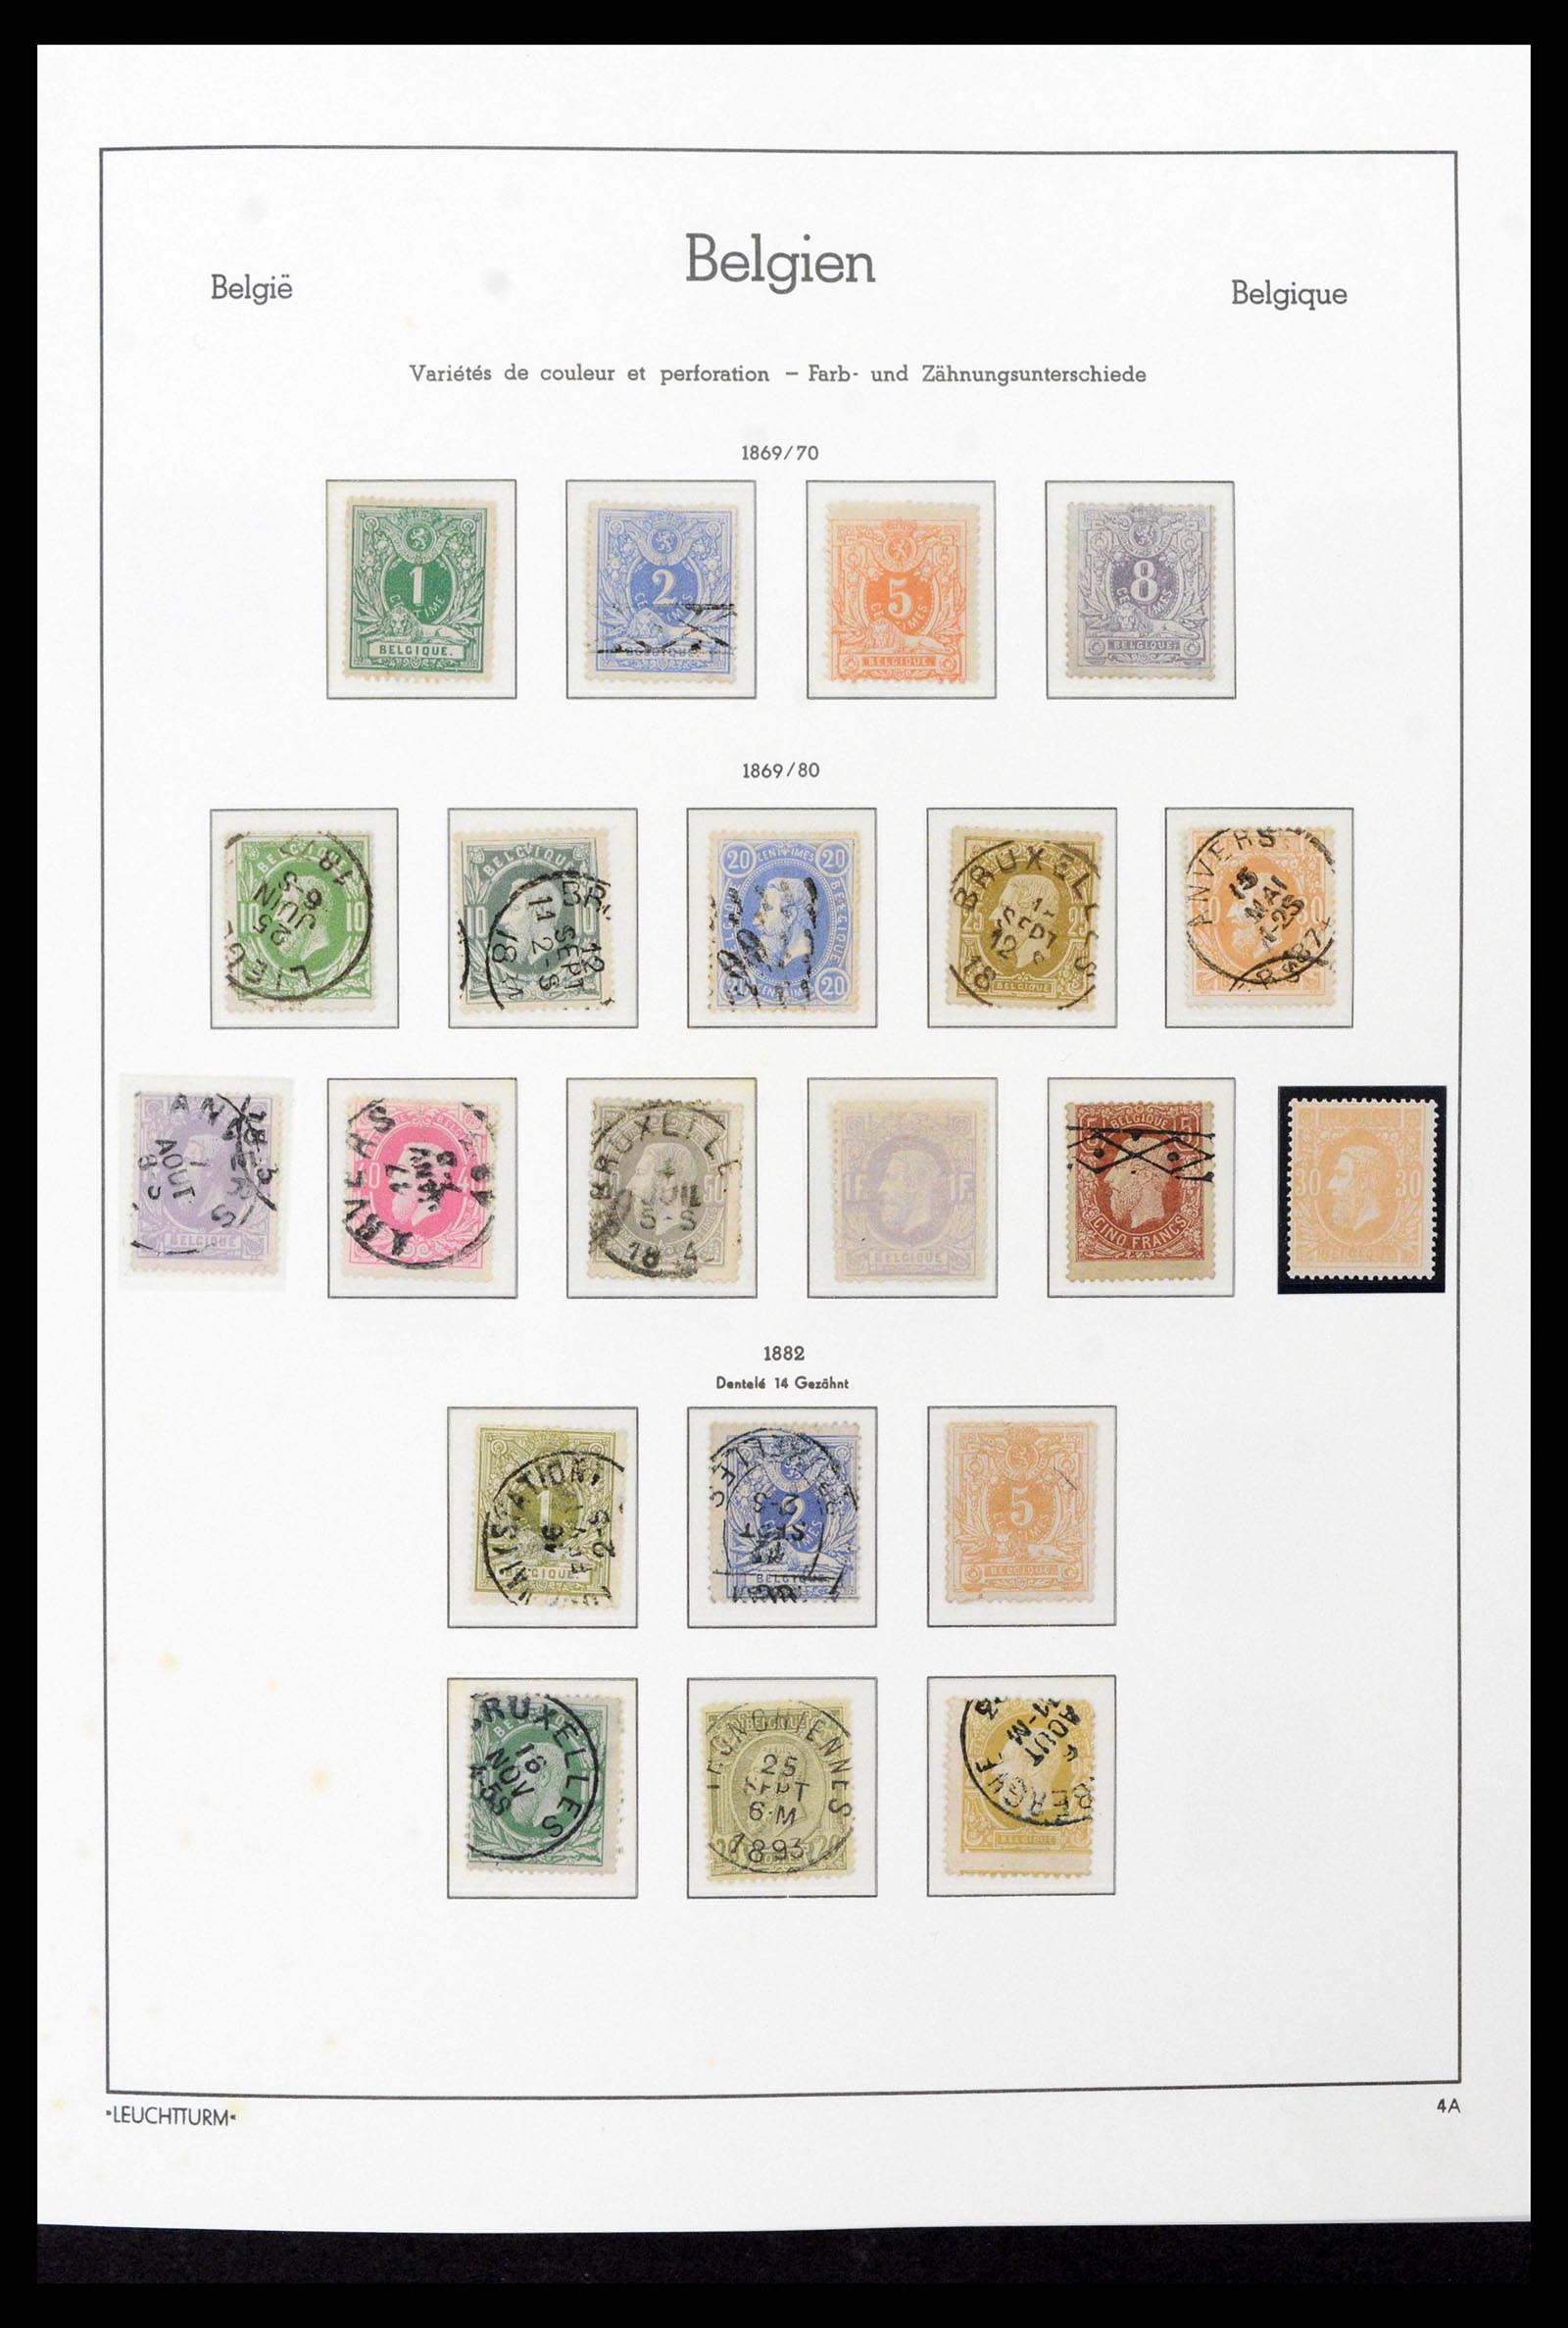 39137 0009 - Stamp collection 39137 Belgium 1849-2002.